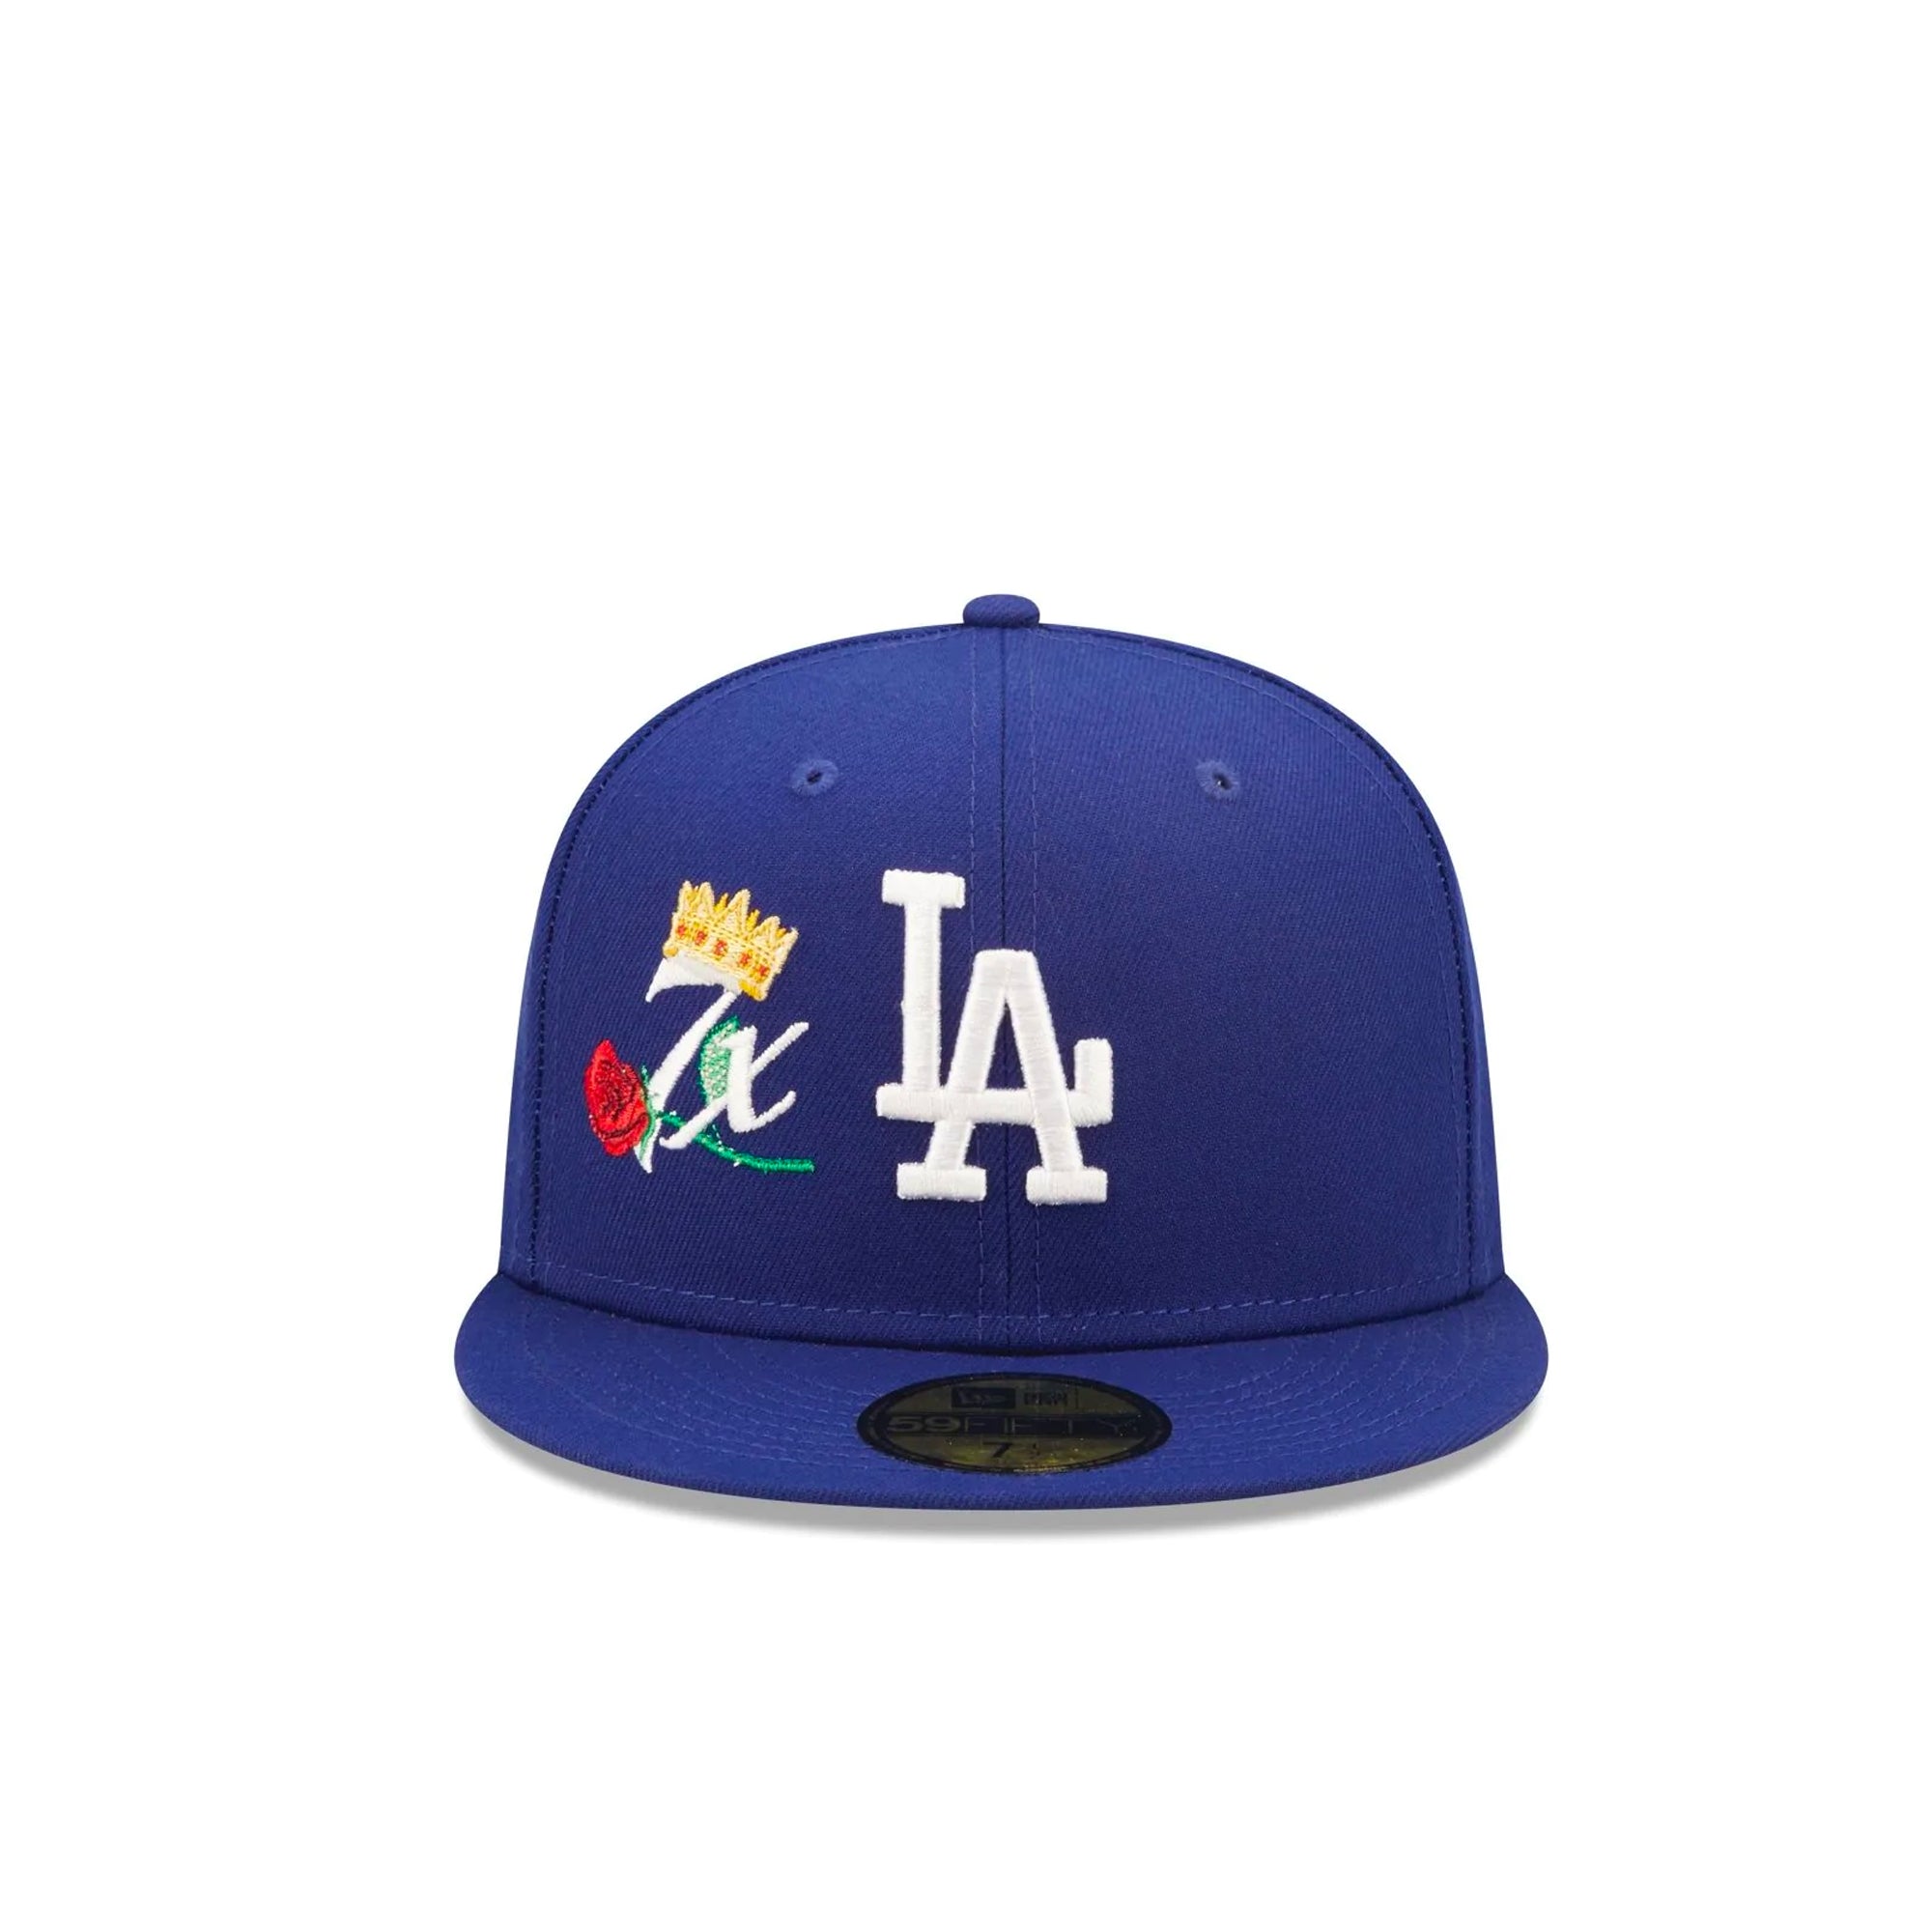 Luxury Dodgers Cap